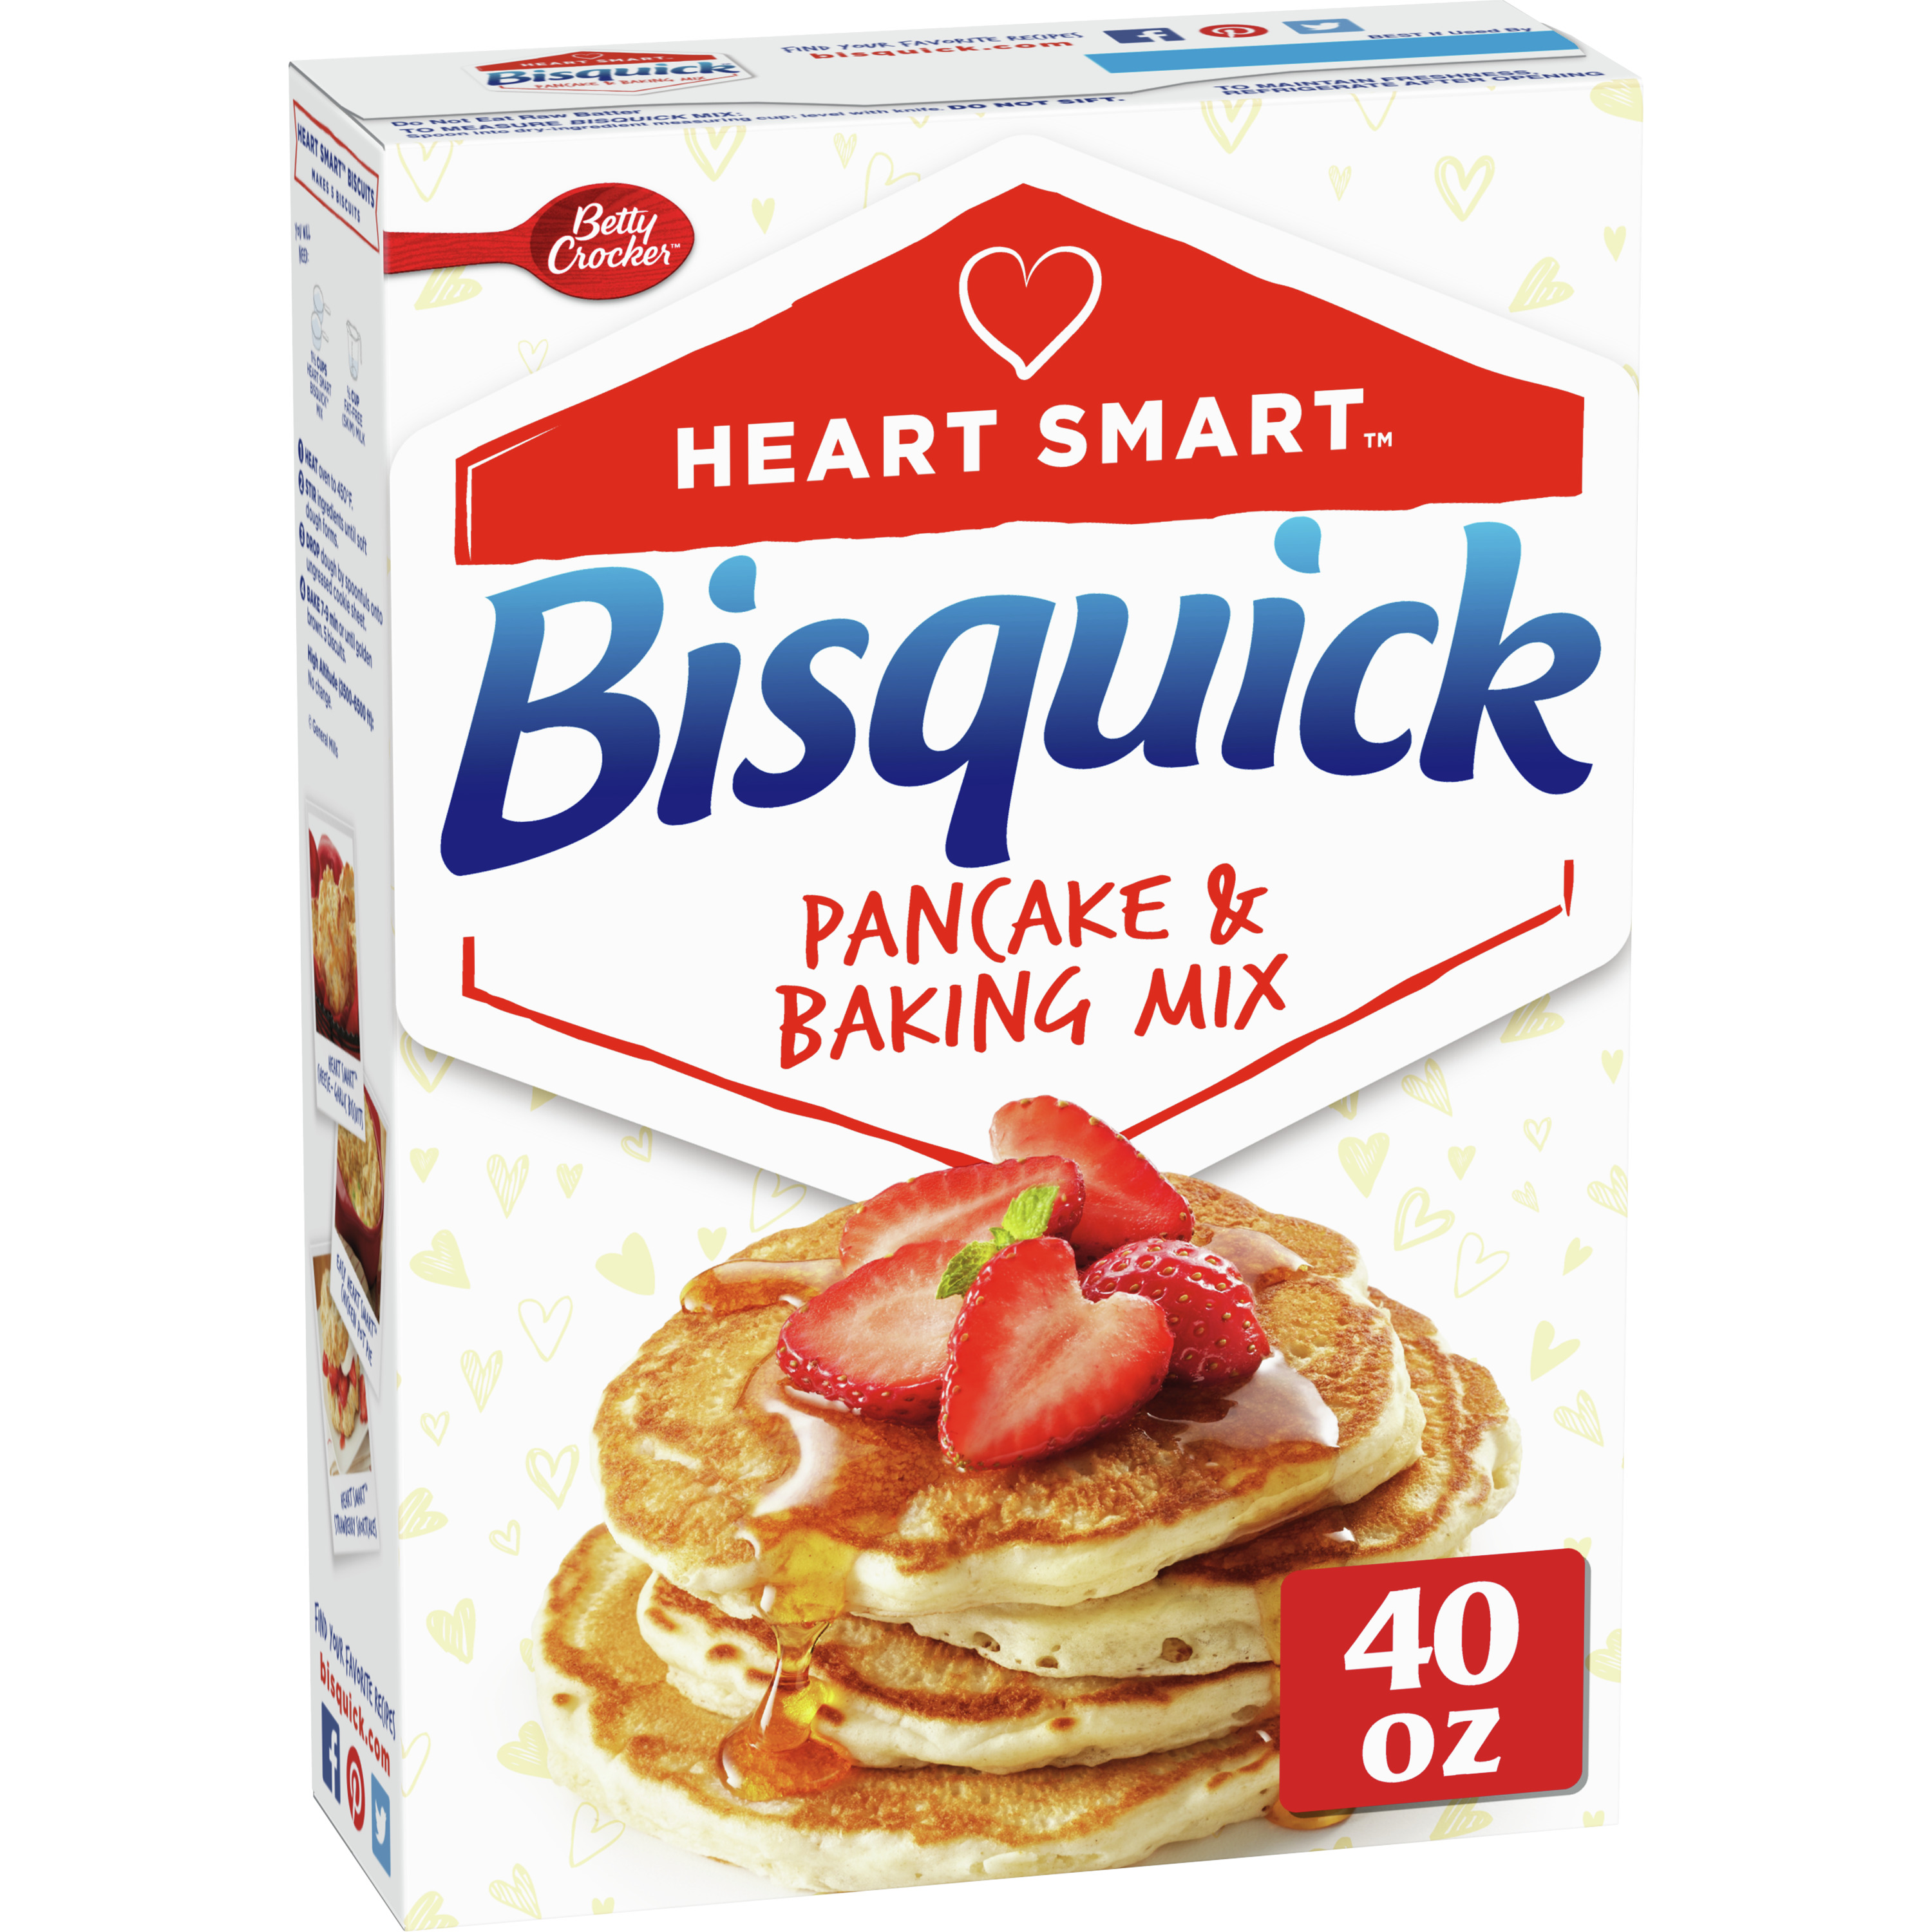 Betty Crocker Heart Smart Bisquick Pancake and Baking Mix, Low-fat & Cholesterol-free, 40 oz. - image 1 of 10